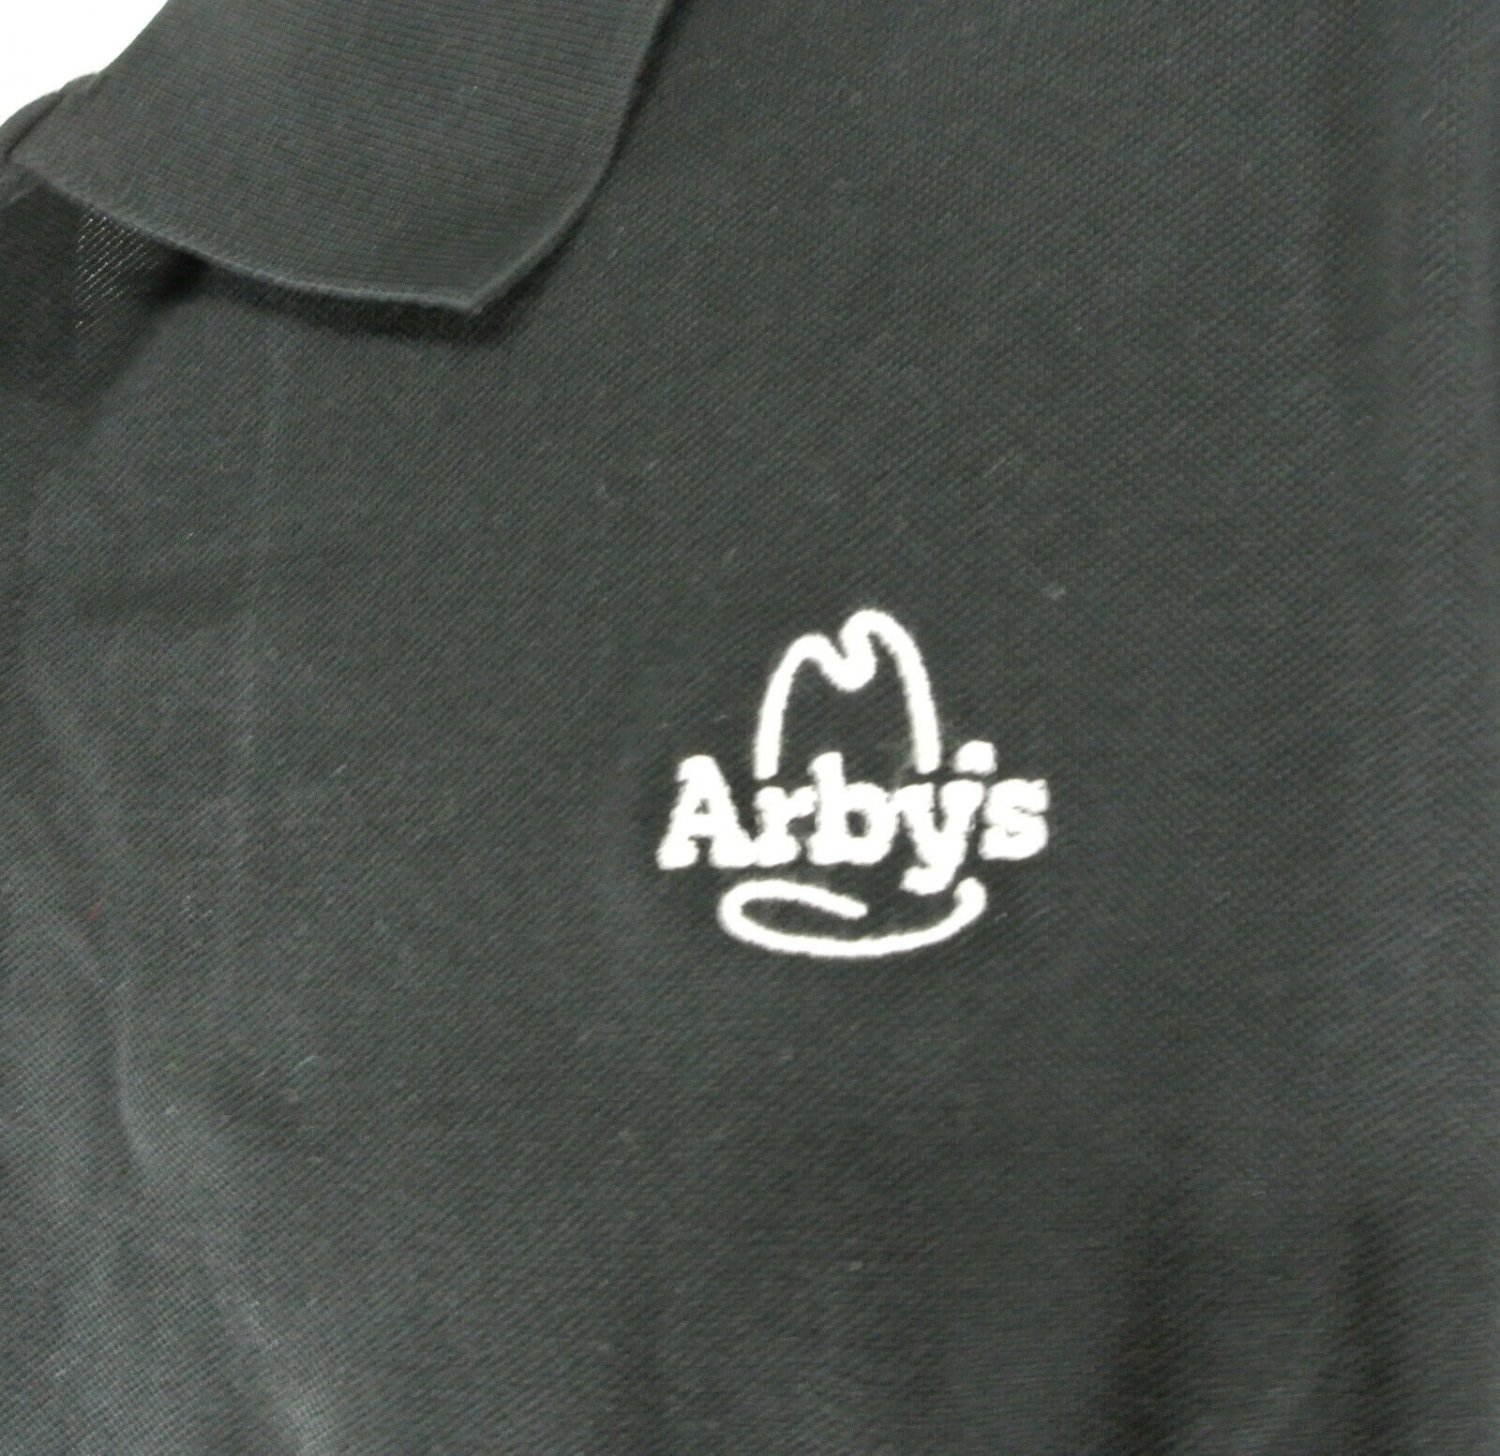 ARBY'S Roast Beef Employee Uniform Polo Shirt Black Size XL 50 NEW MT